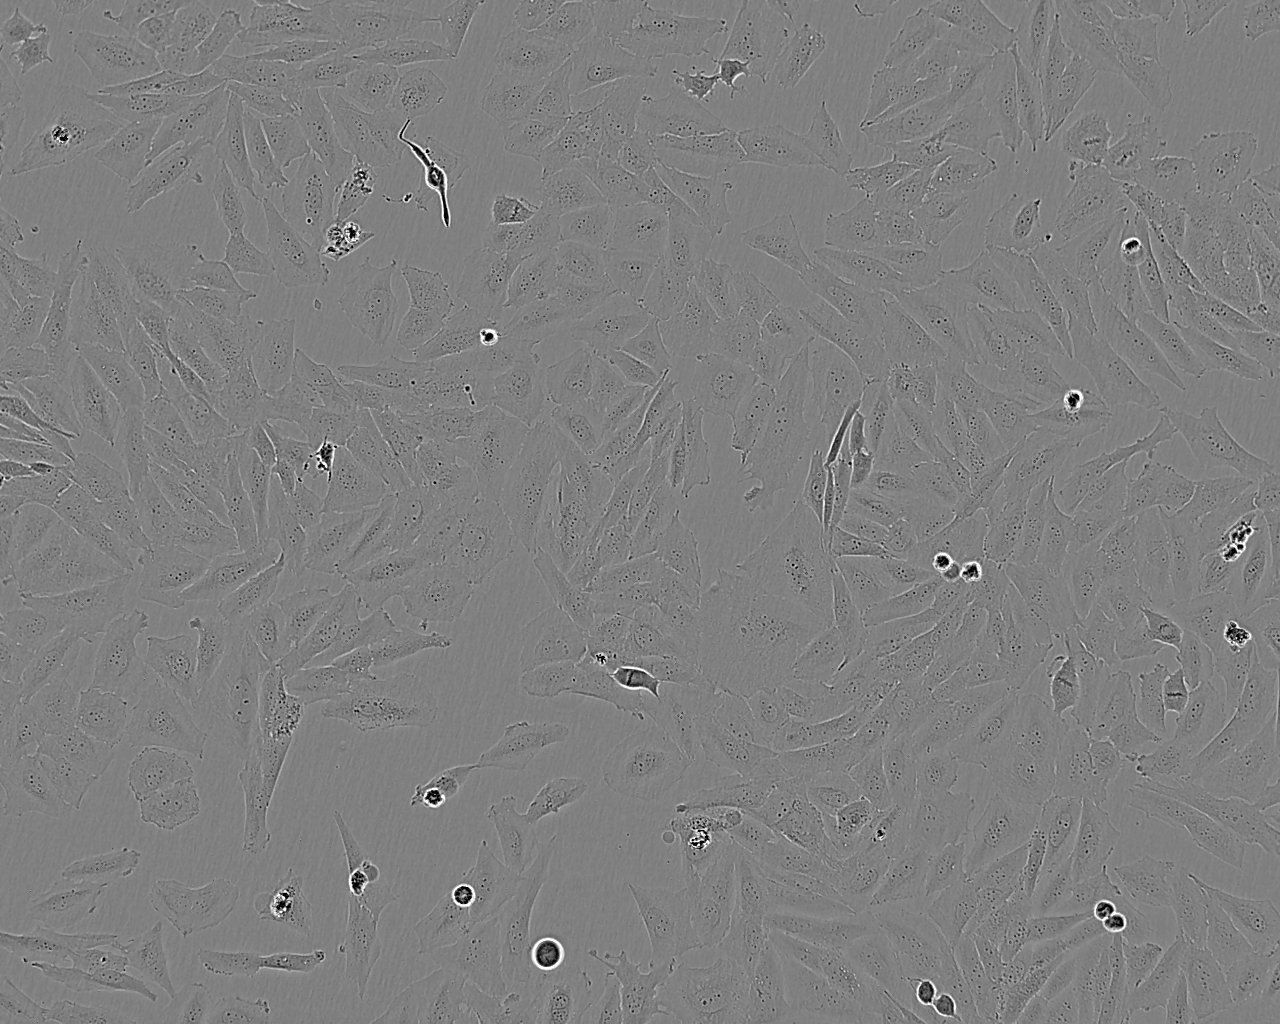 NCI-H650 Cells|人非小细胞肺癌细胞系,NCI-H650 Cells